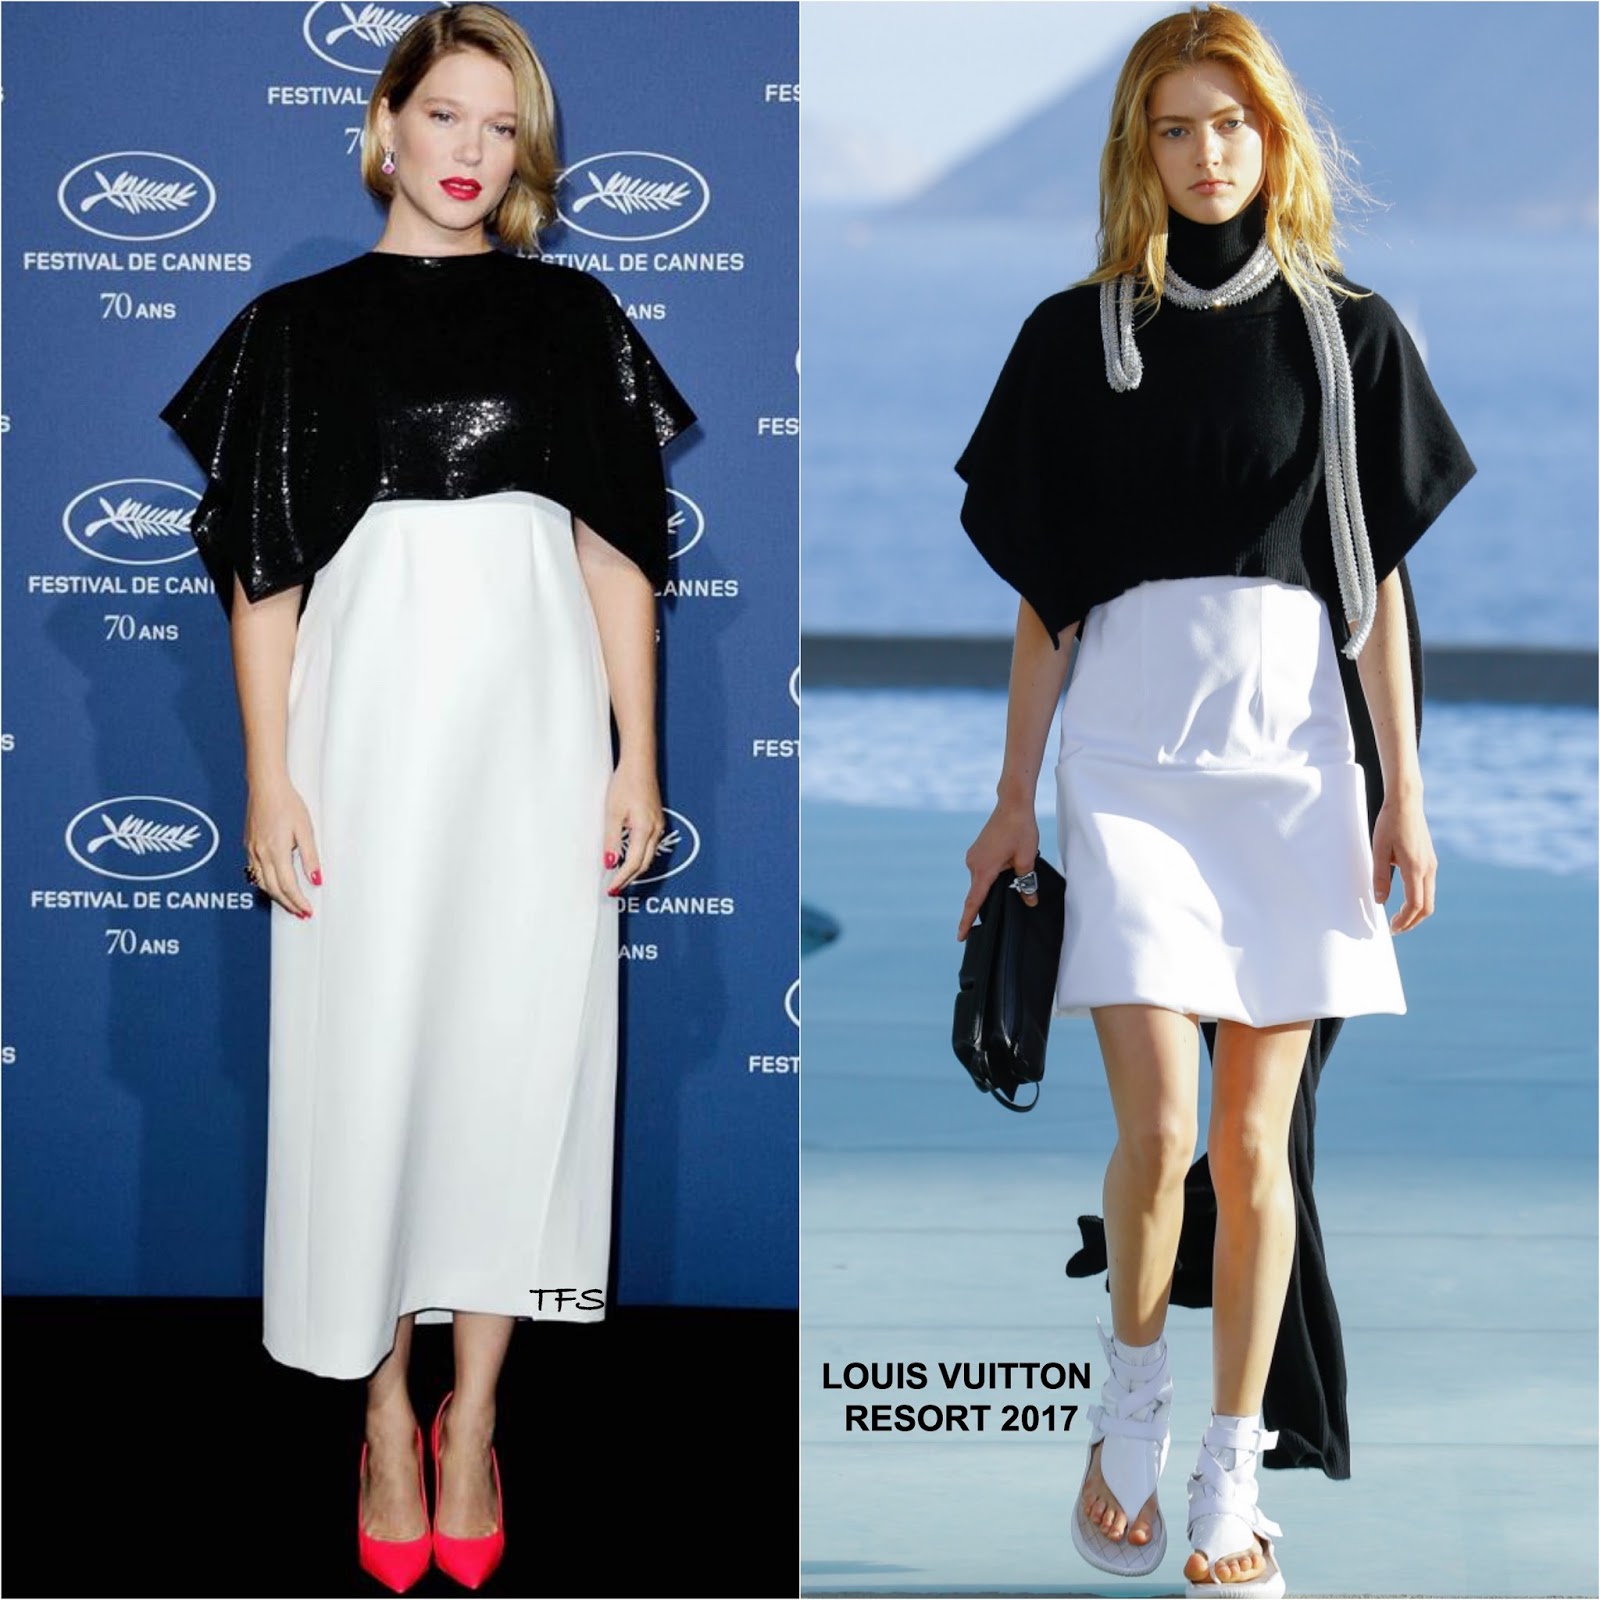 Cannes Film Festival 2022: Léa Seydoux in Louis Vuitton at the